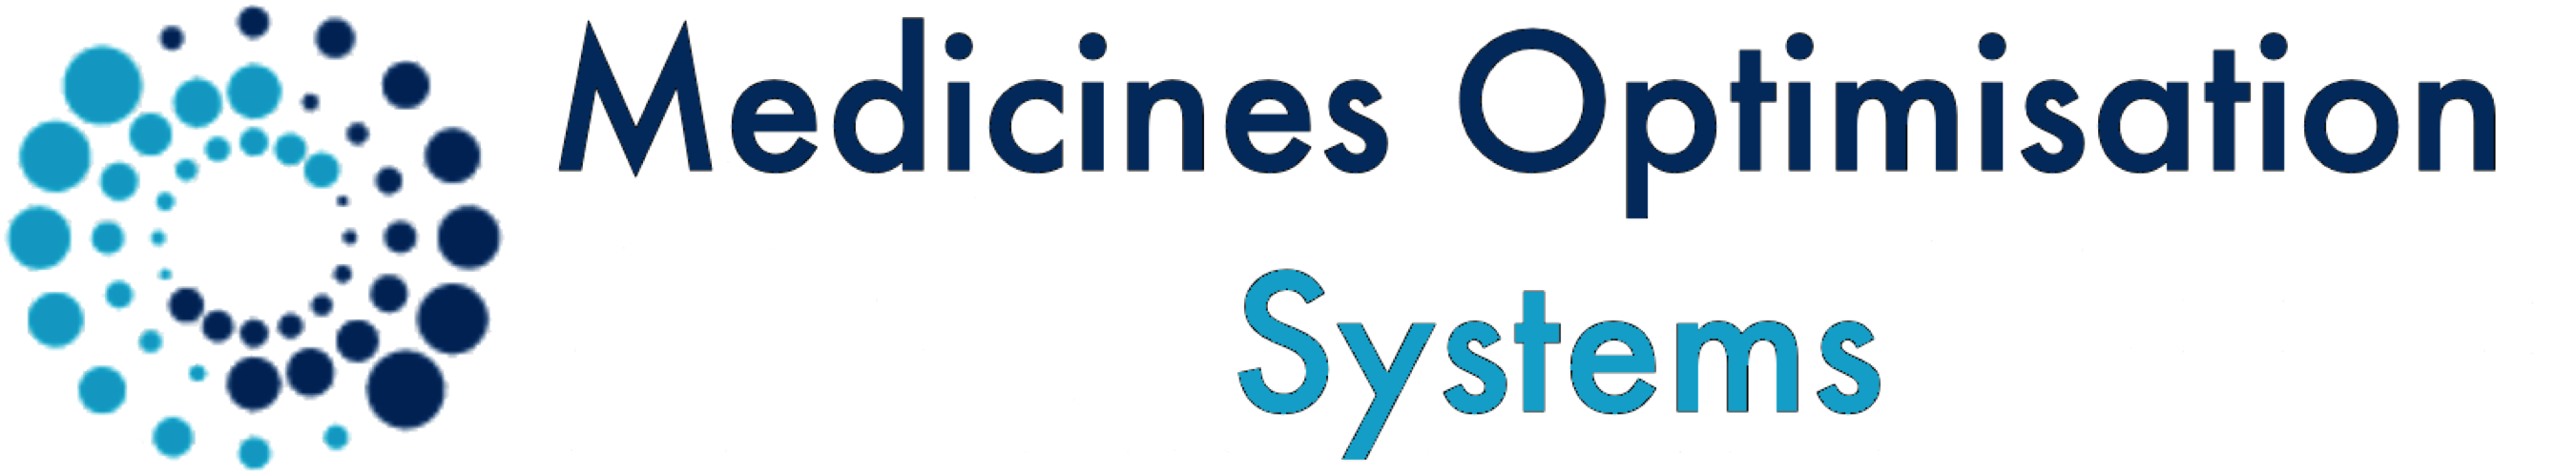 Medicines Optimisation Systems Logo